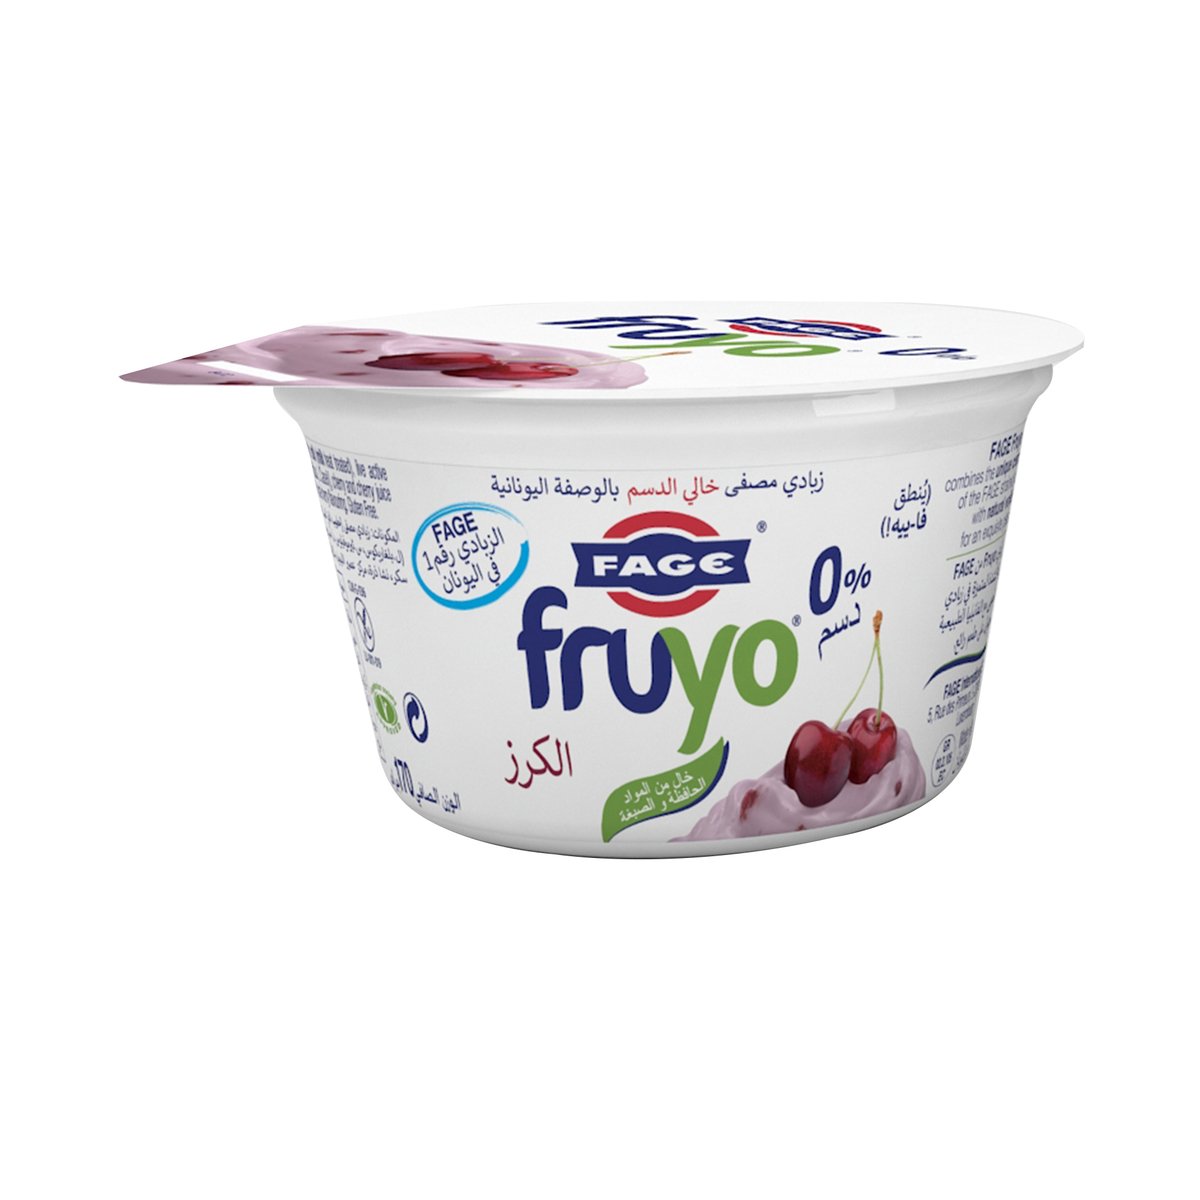 Fage Fruyo 0% Yoghurt Cherry 170 g